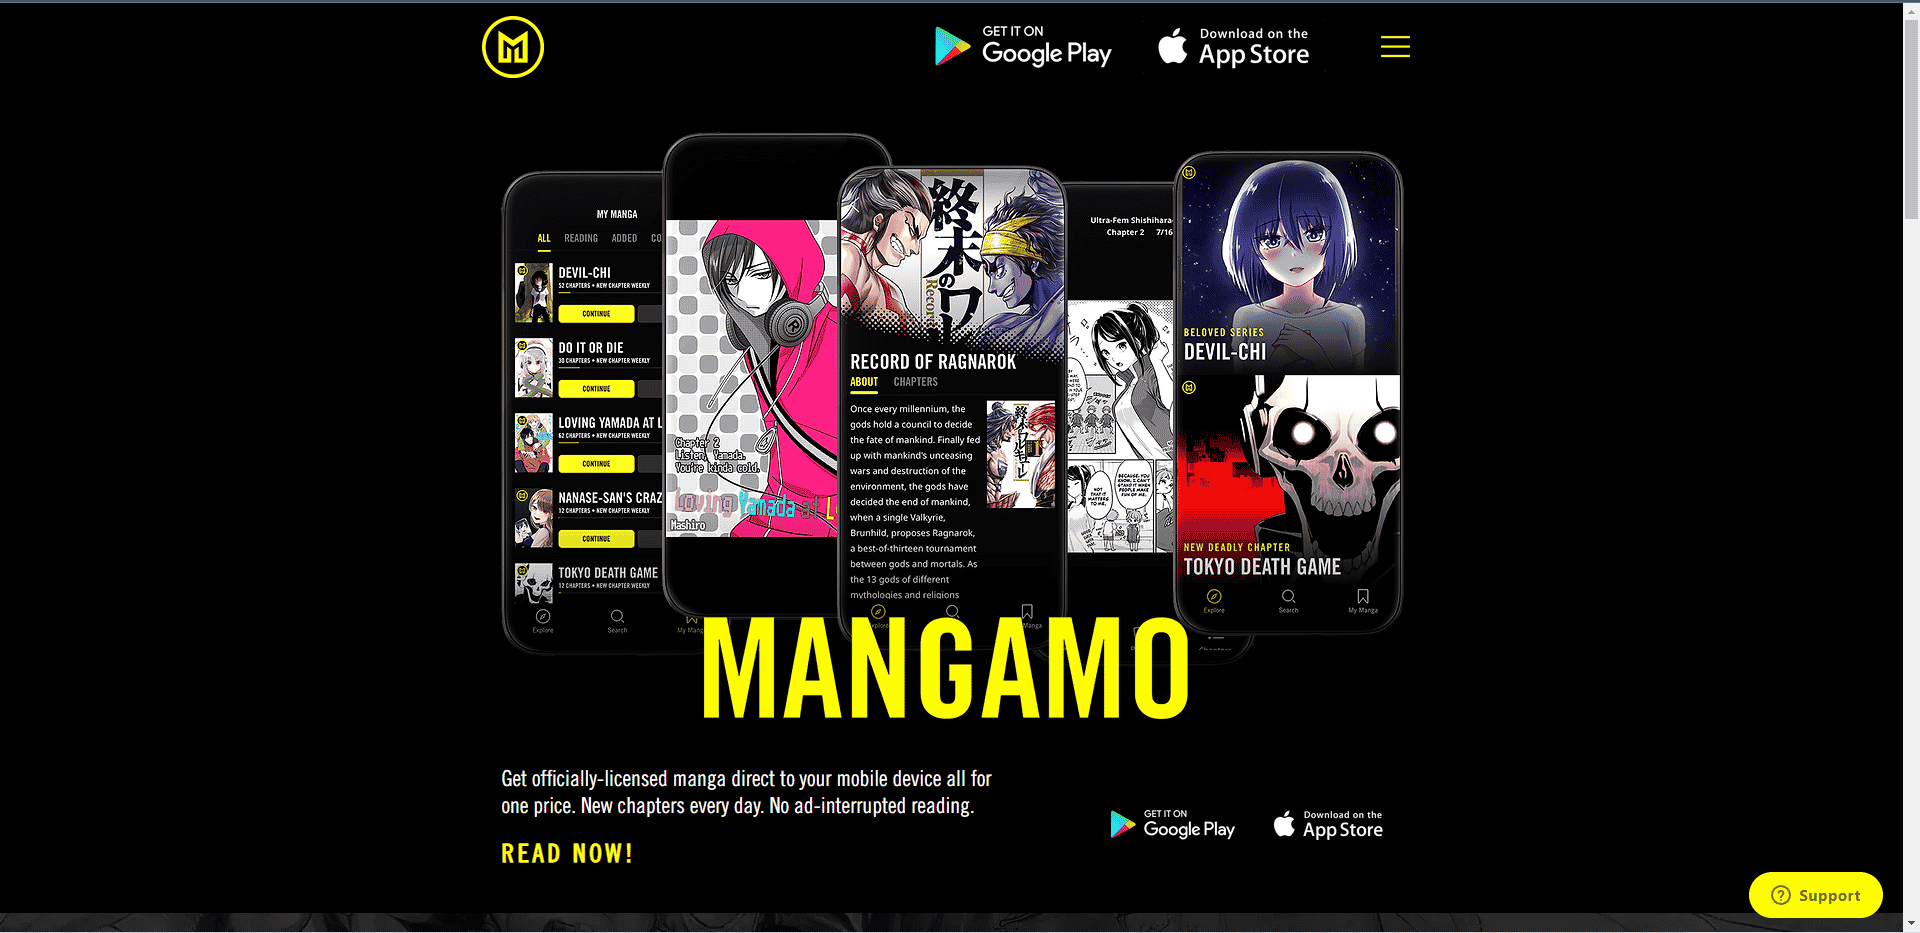 Mangamo official website